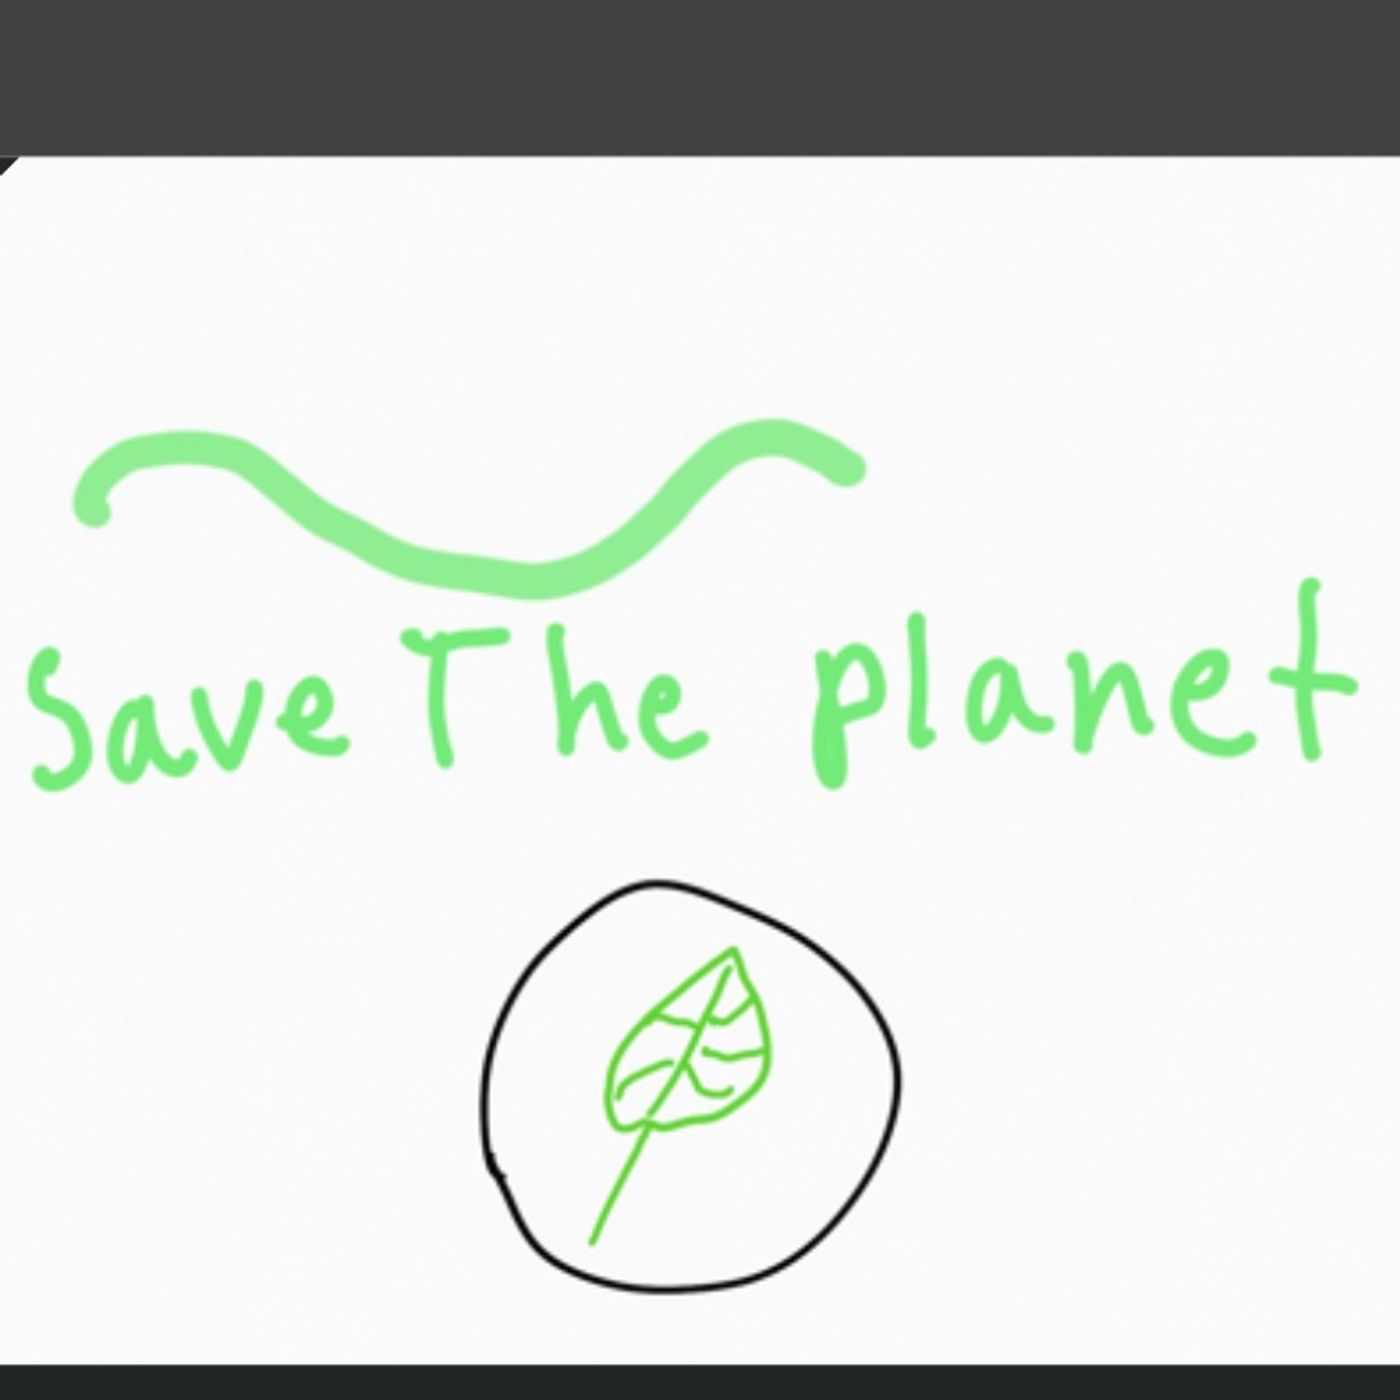 Saving trees